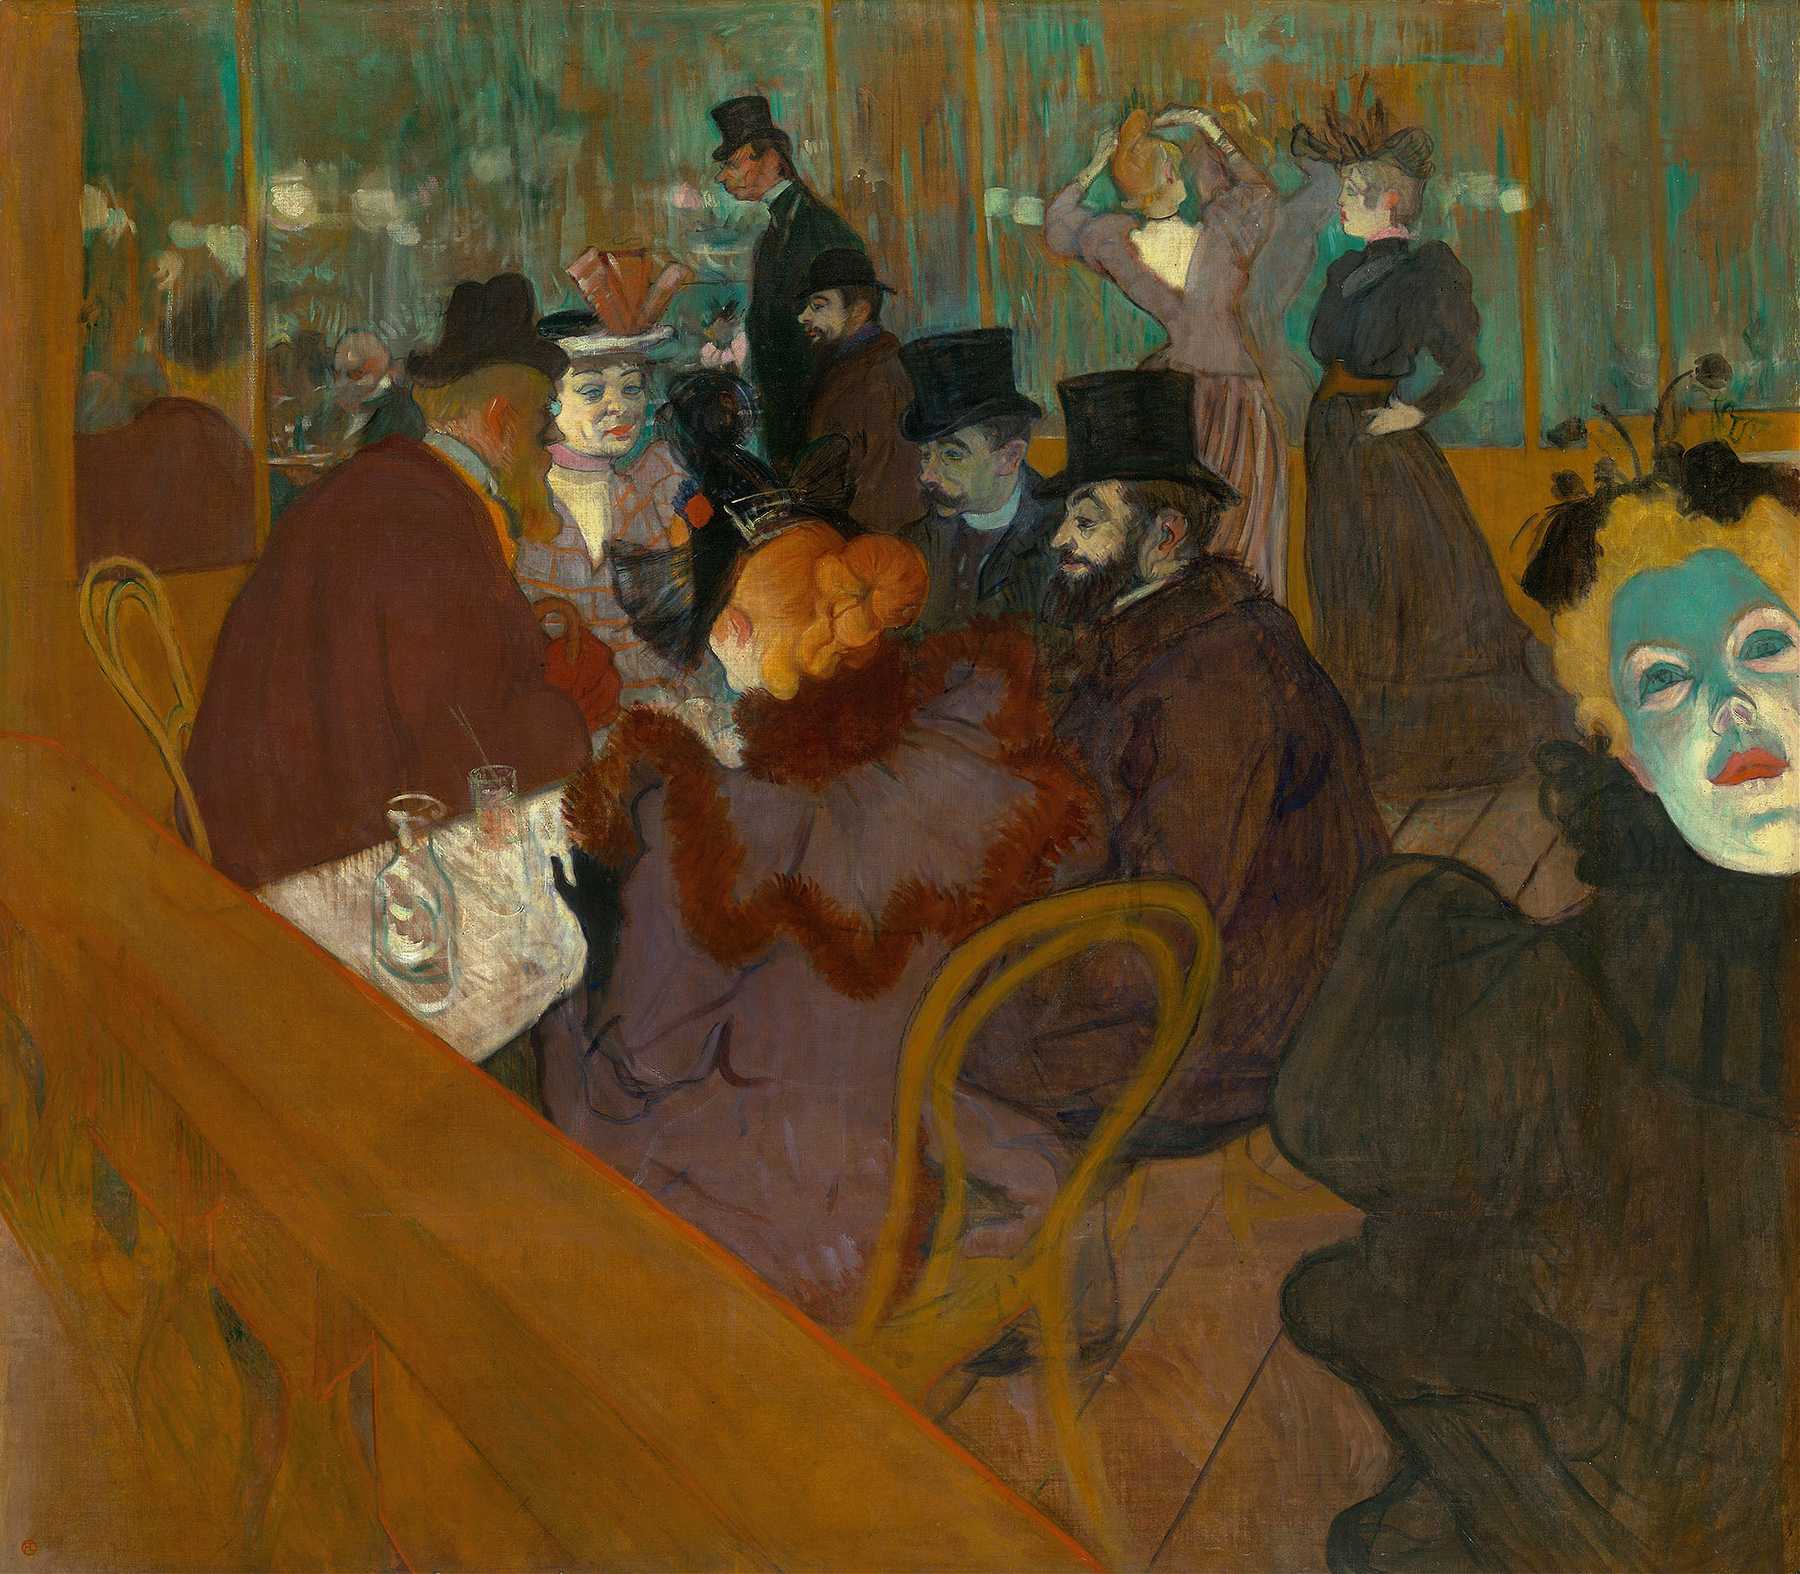 Find out more about Henri de Toulouse-Lautrec - At the Moulin Rouge